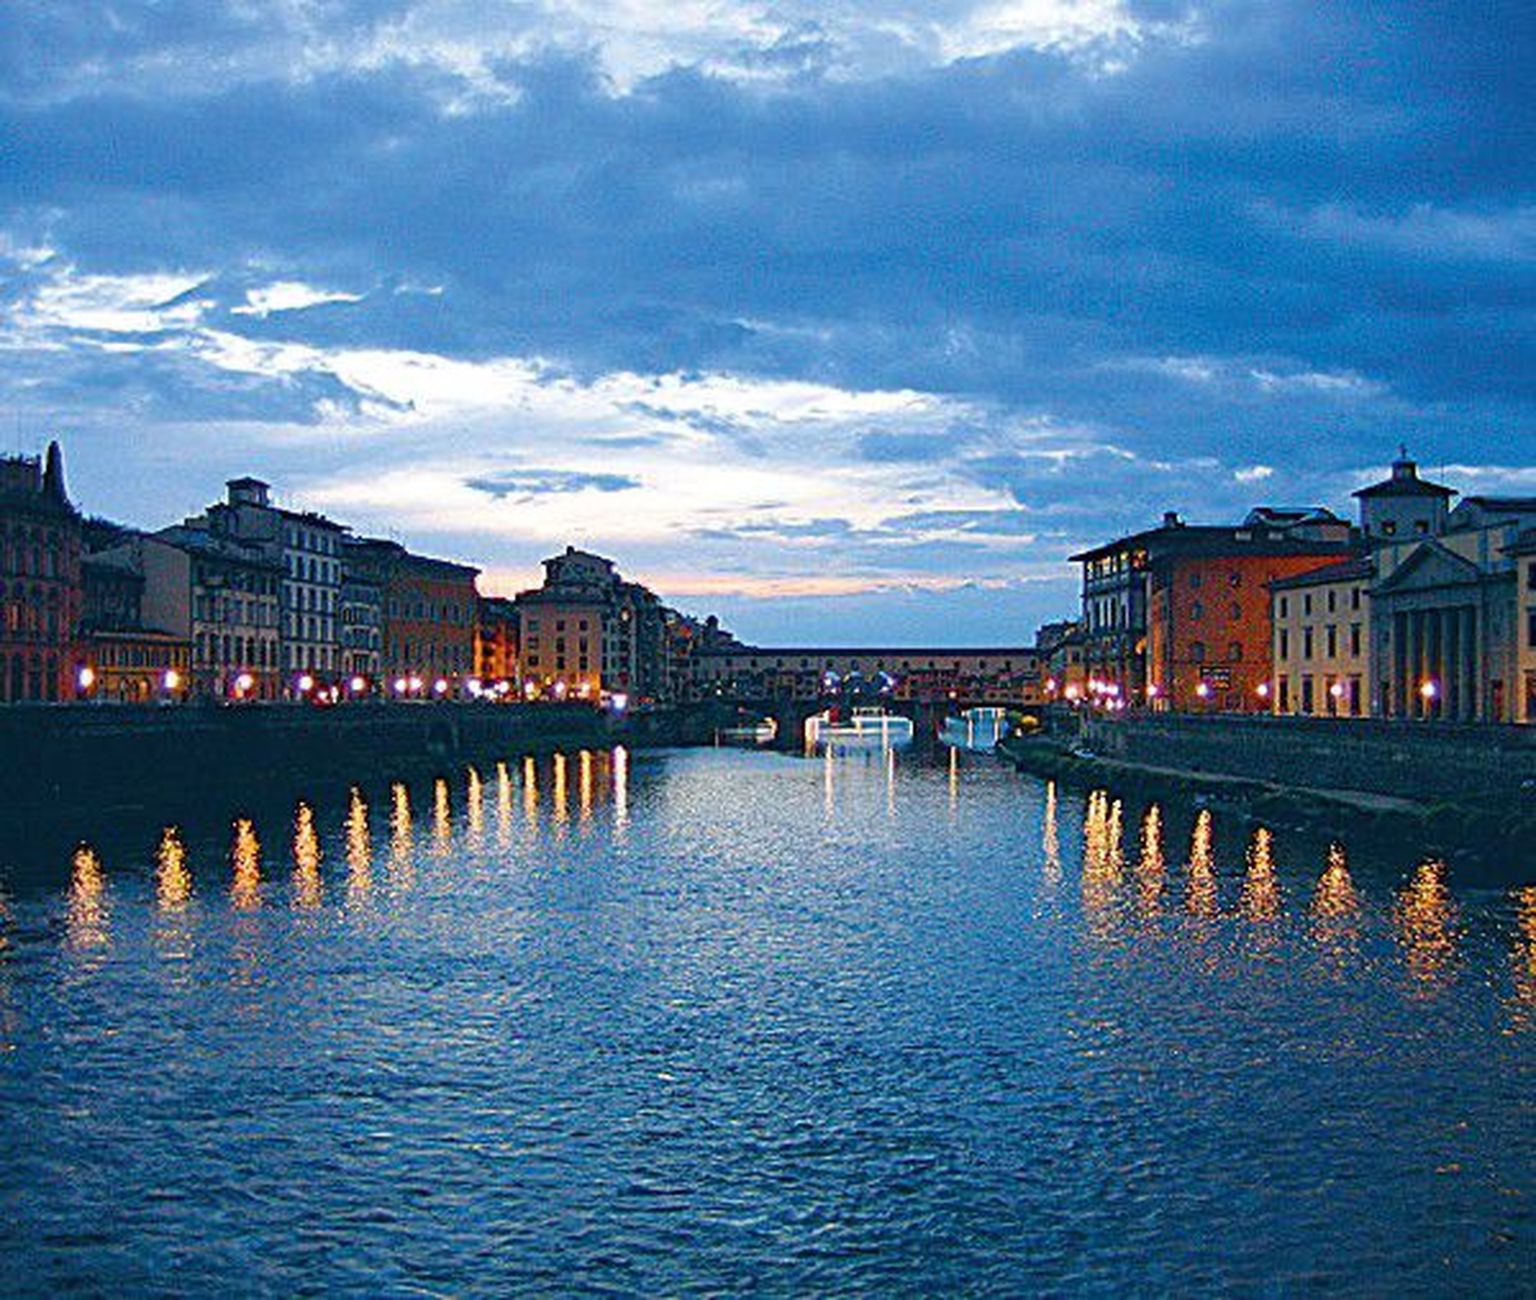 Õhtune vaade Ponte Vecchiole.